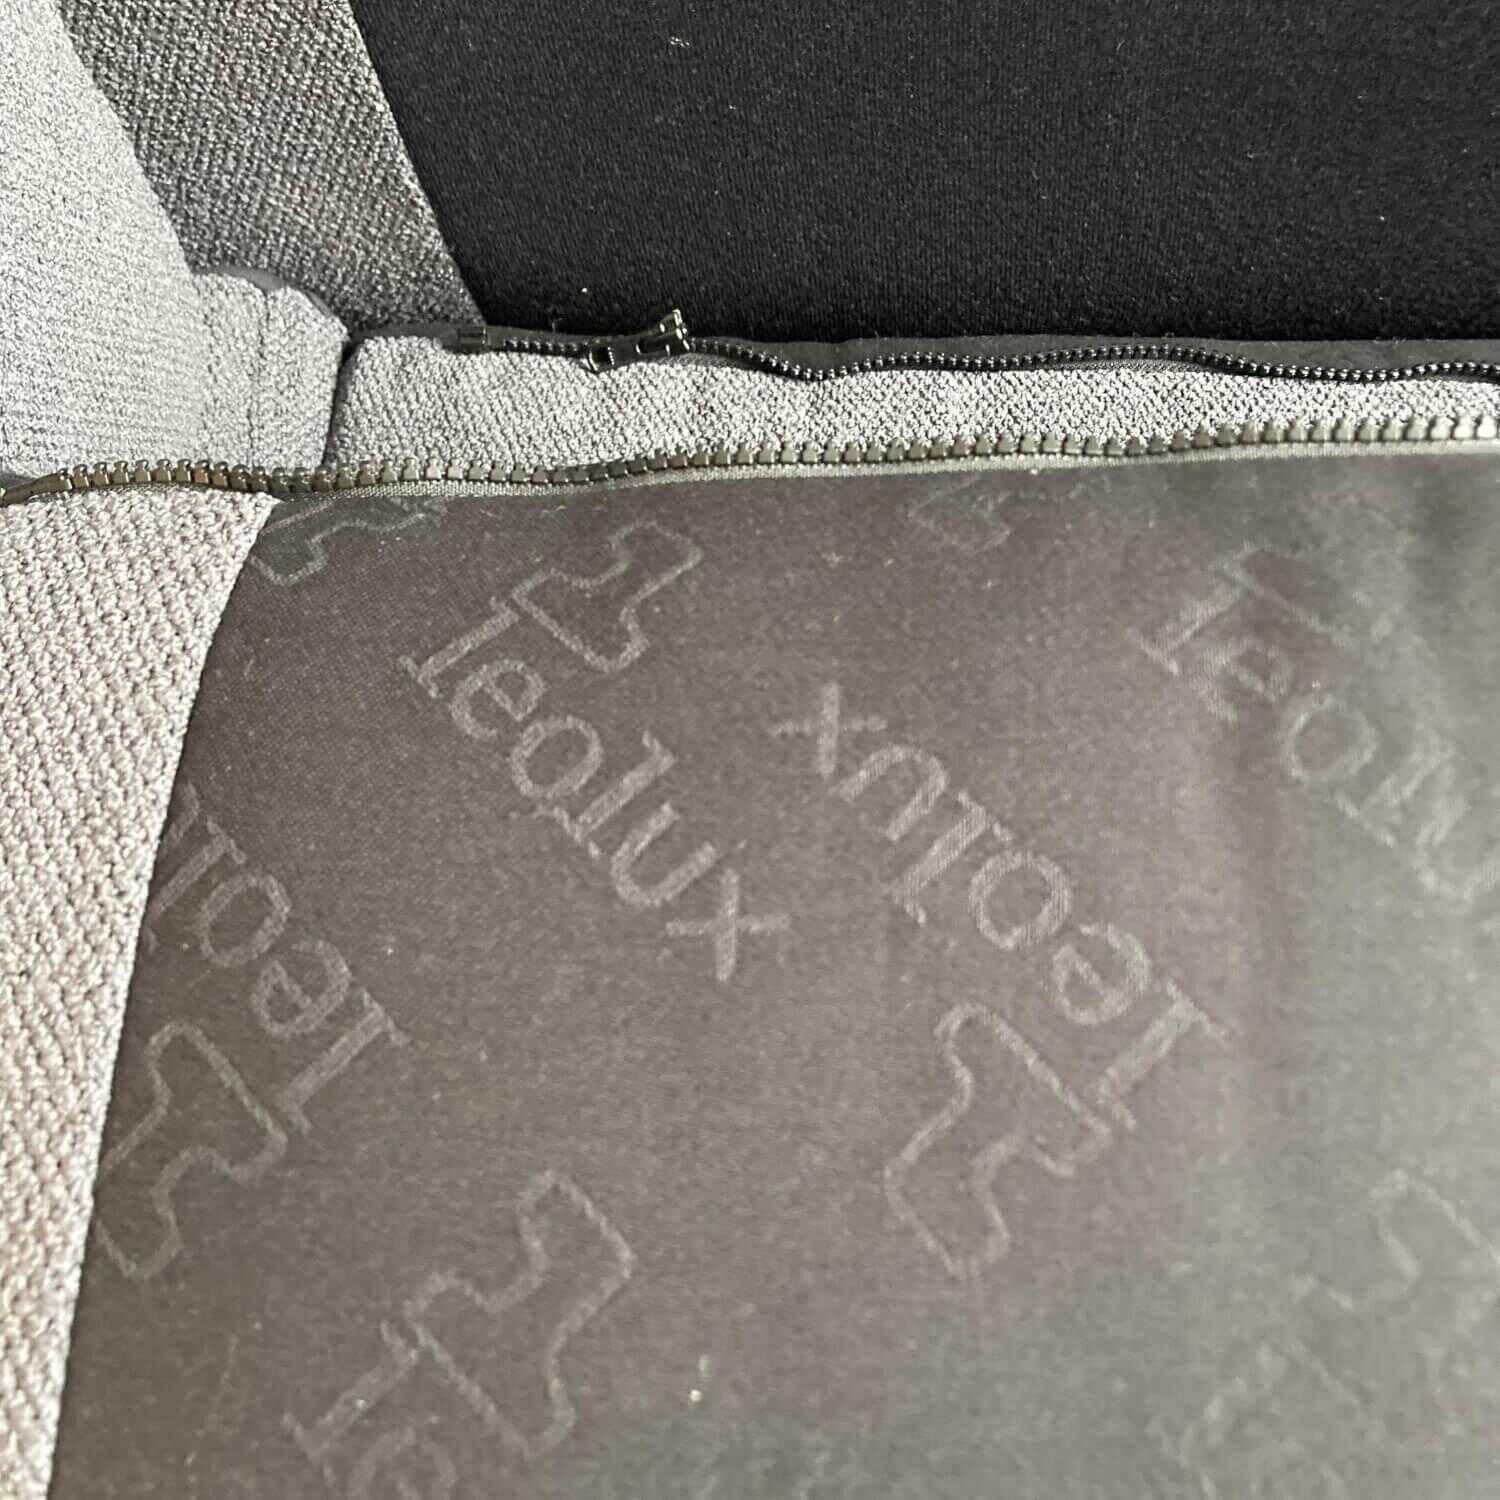 Sofa Bellice Stoff Artez Cuzco 190 Procto Anthrazit Grau Metall Grau